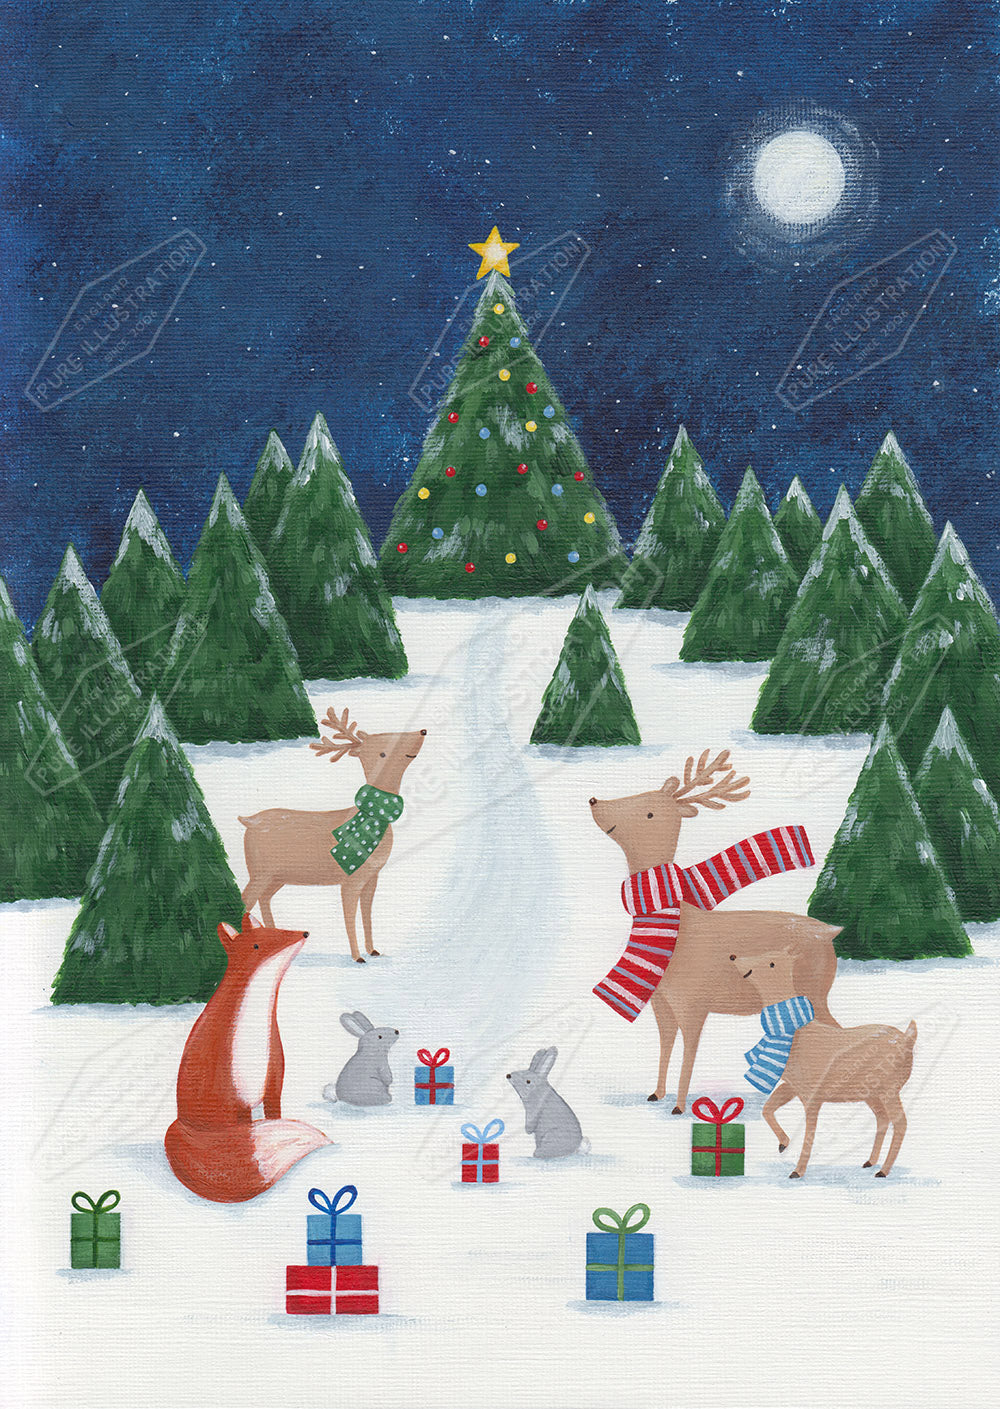 00033885AAI - Christmas Wildlife Greeting Card Design - Pure International Art Licensing Agency